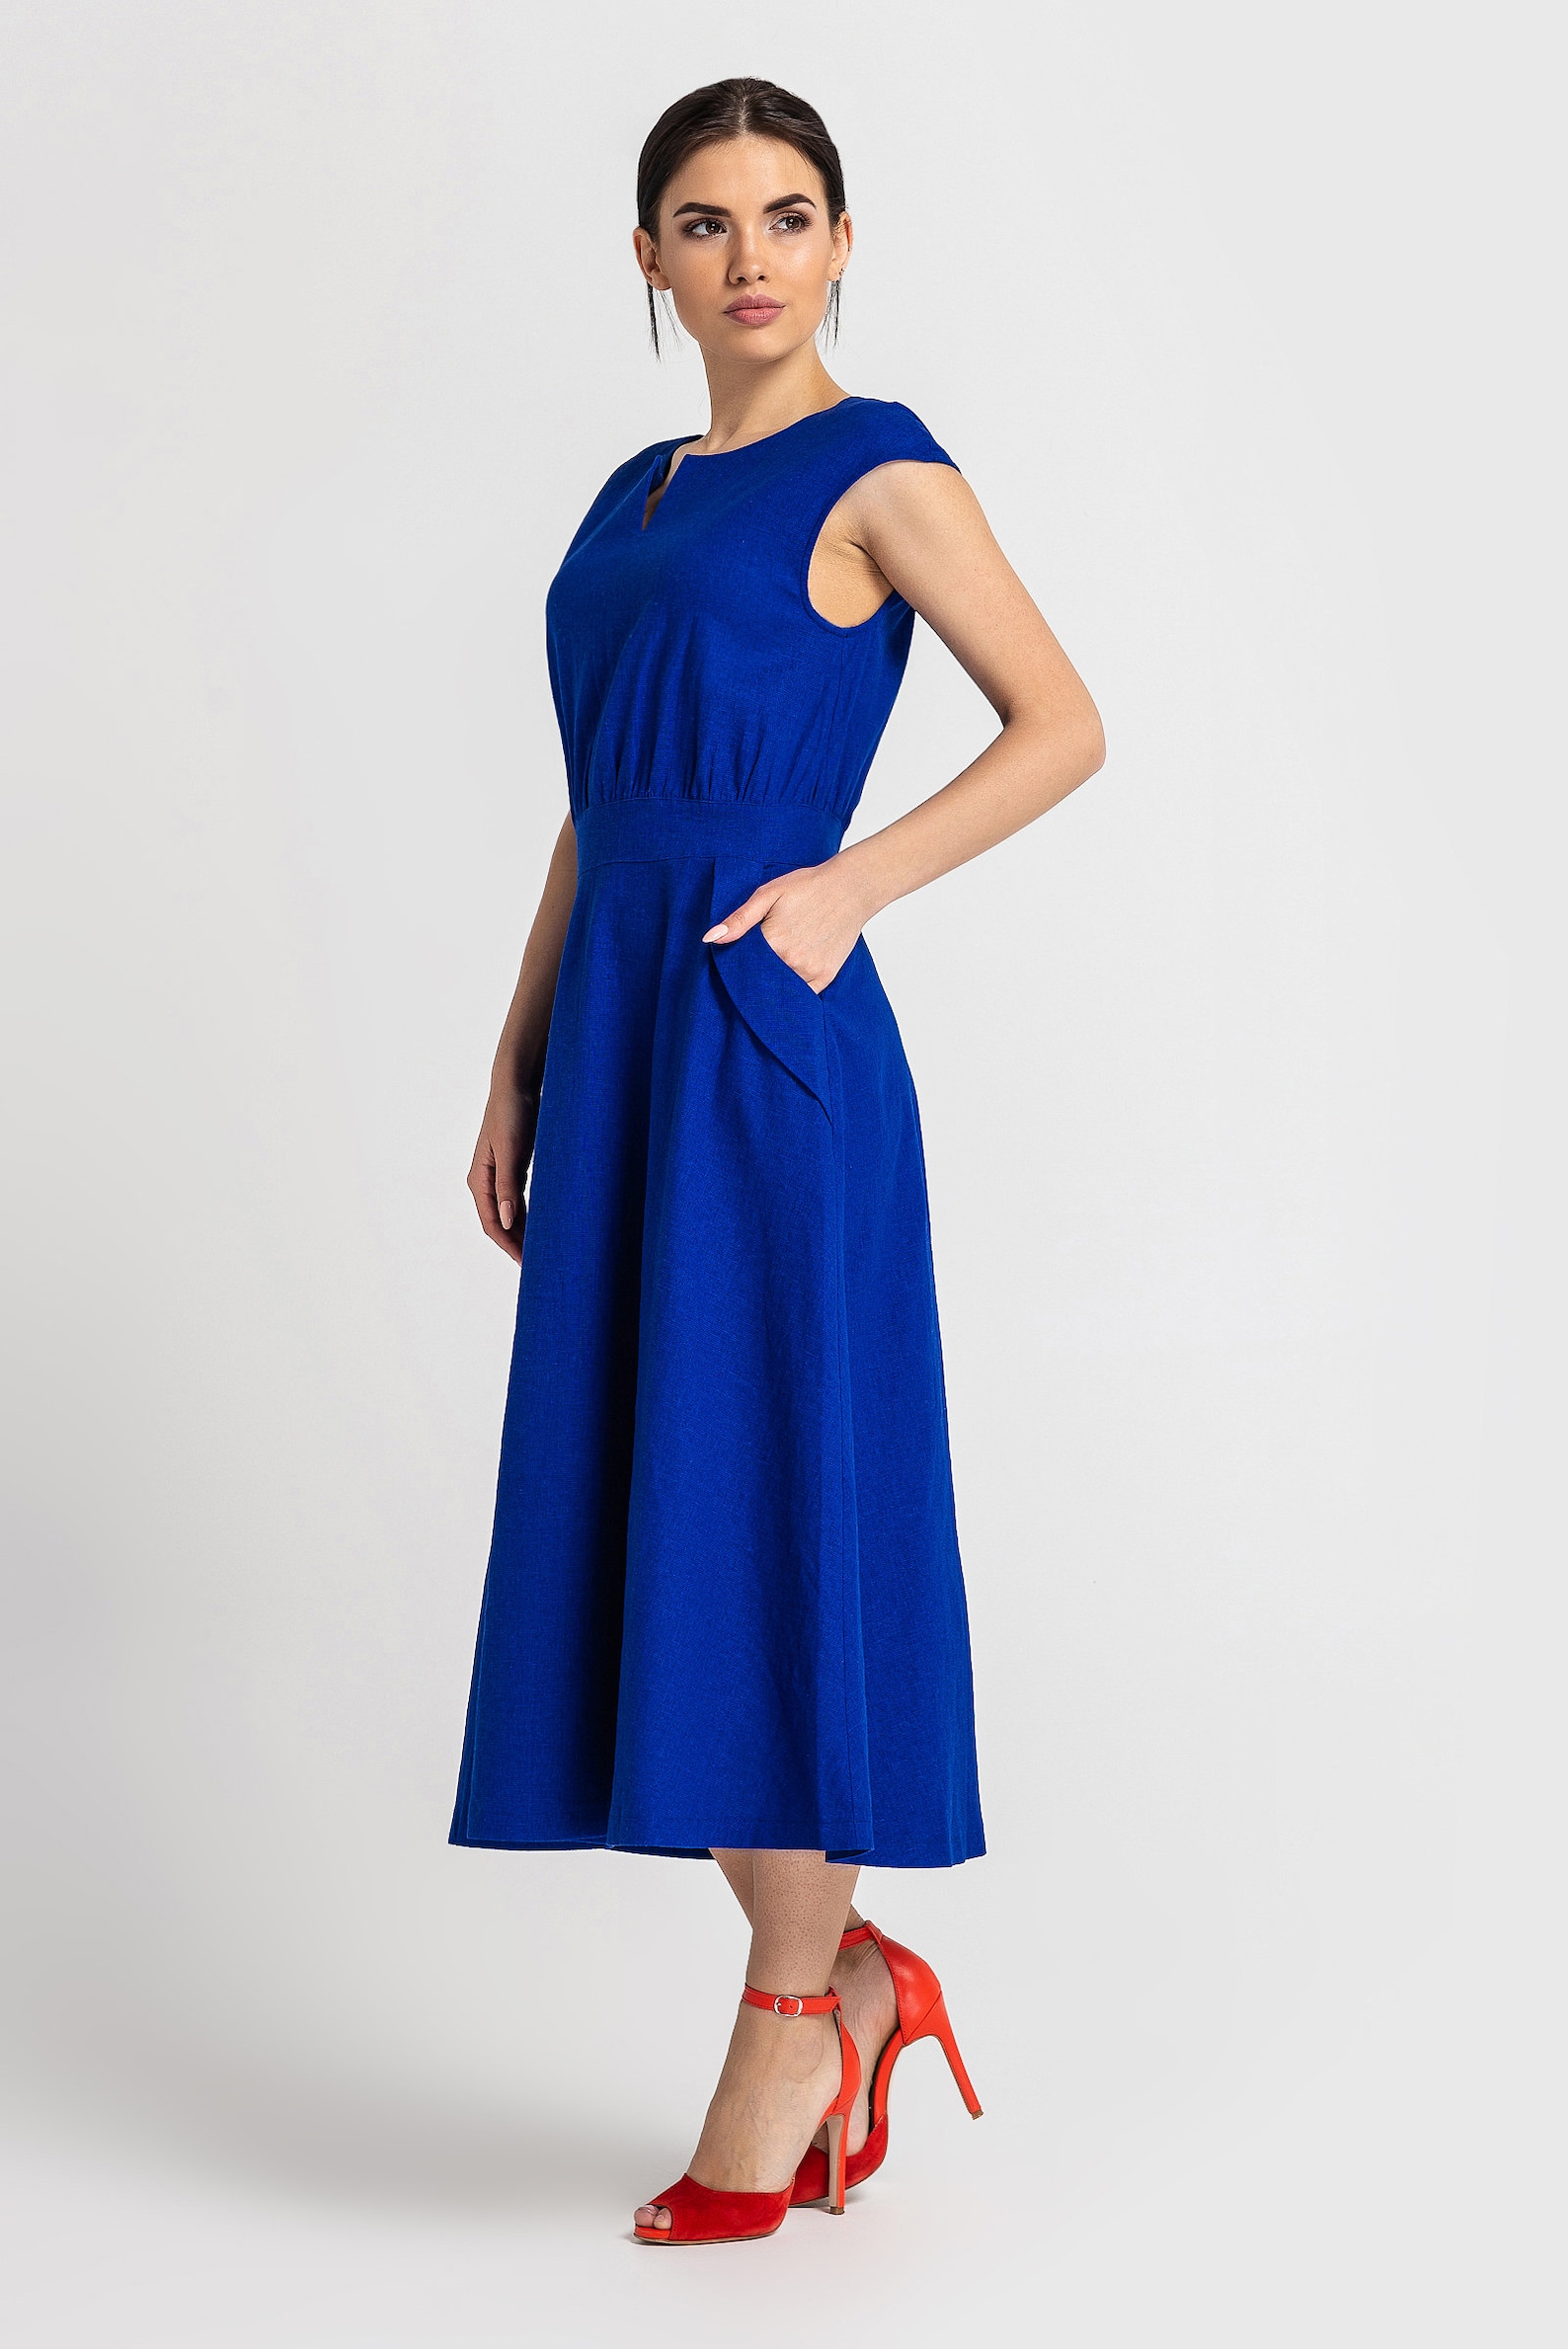 Linen Dress With Pockets Summer Dresses for Women Modest - Etsy